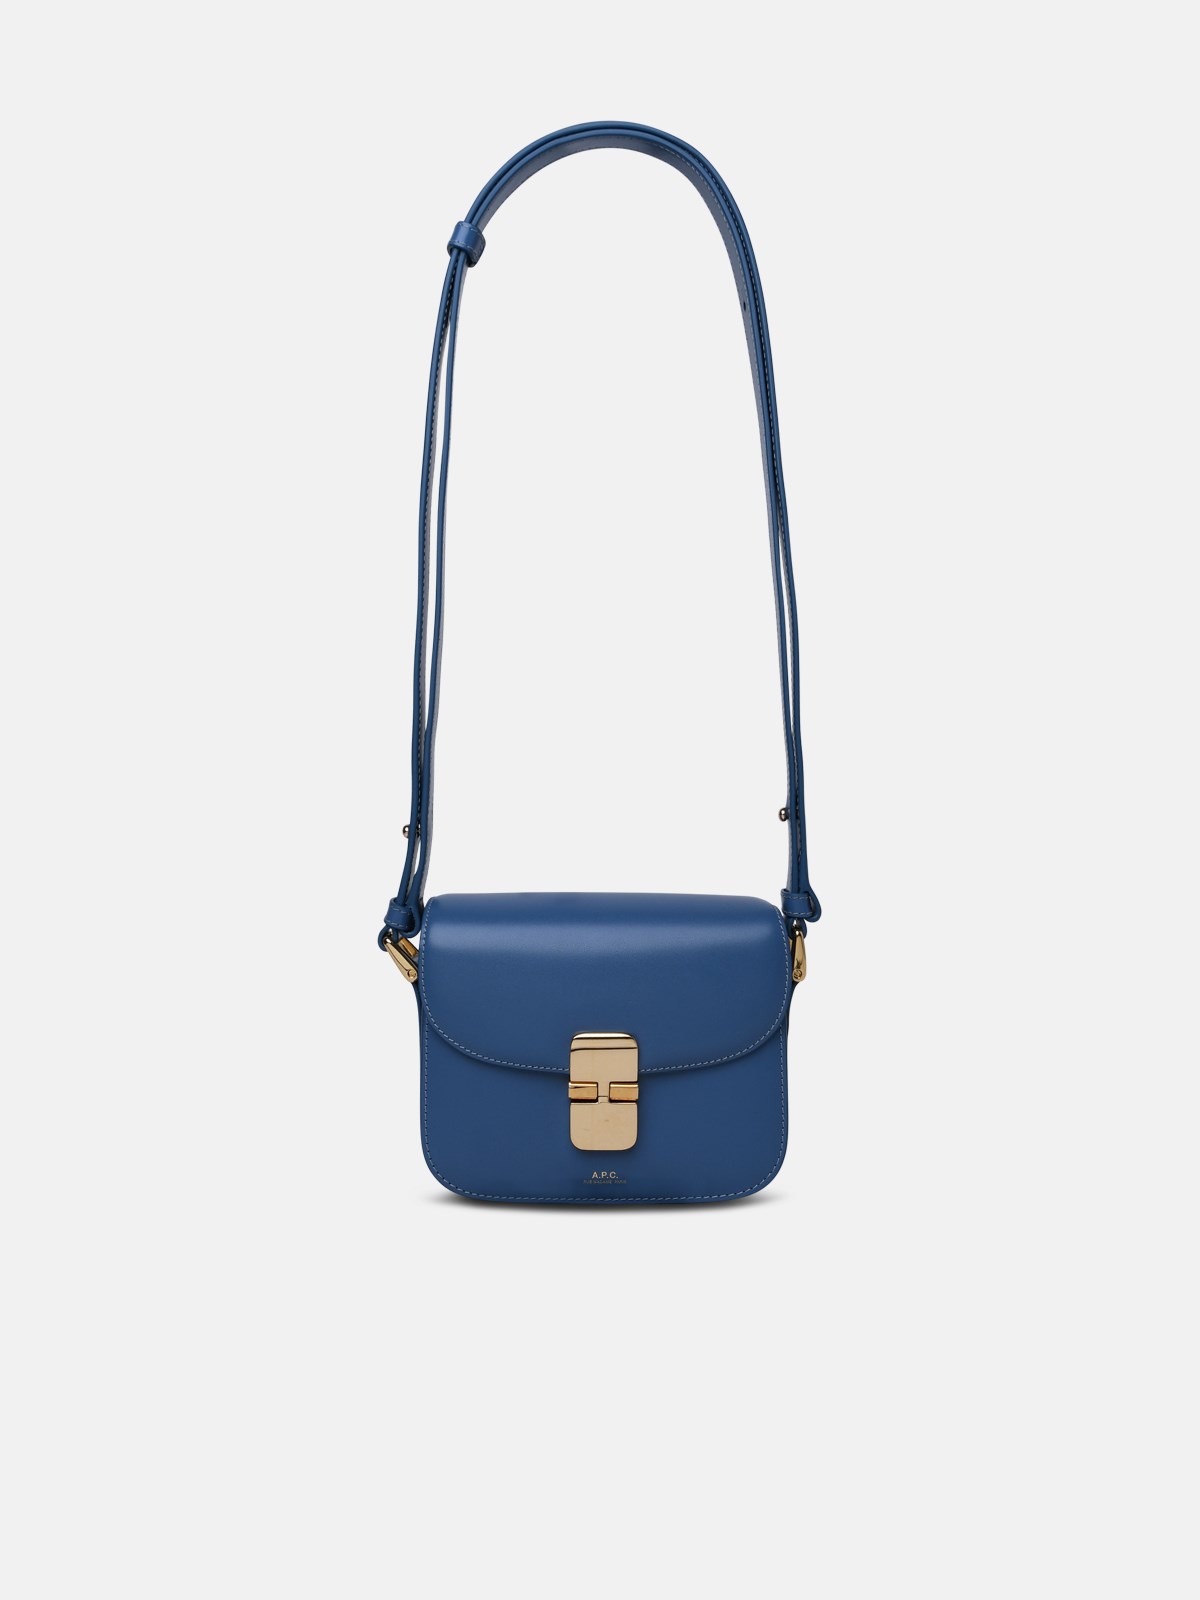 Apc Light Blue Leather Bag